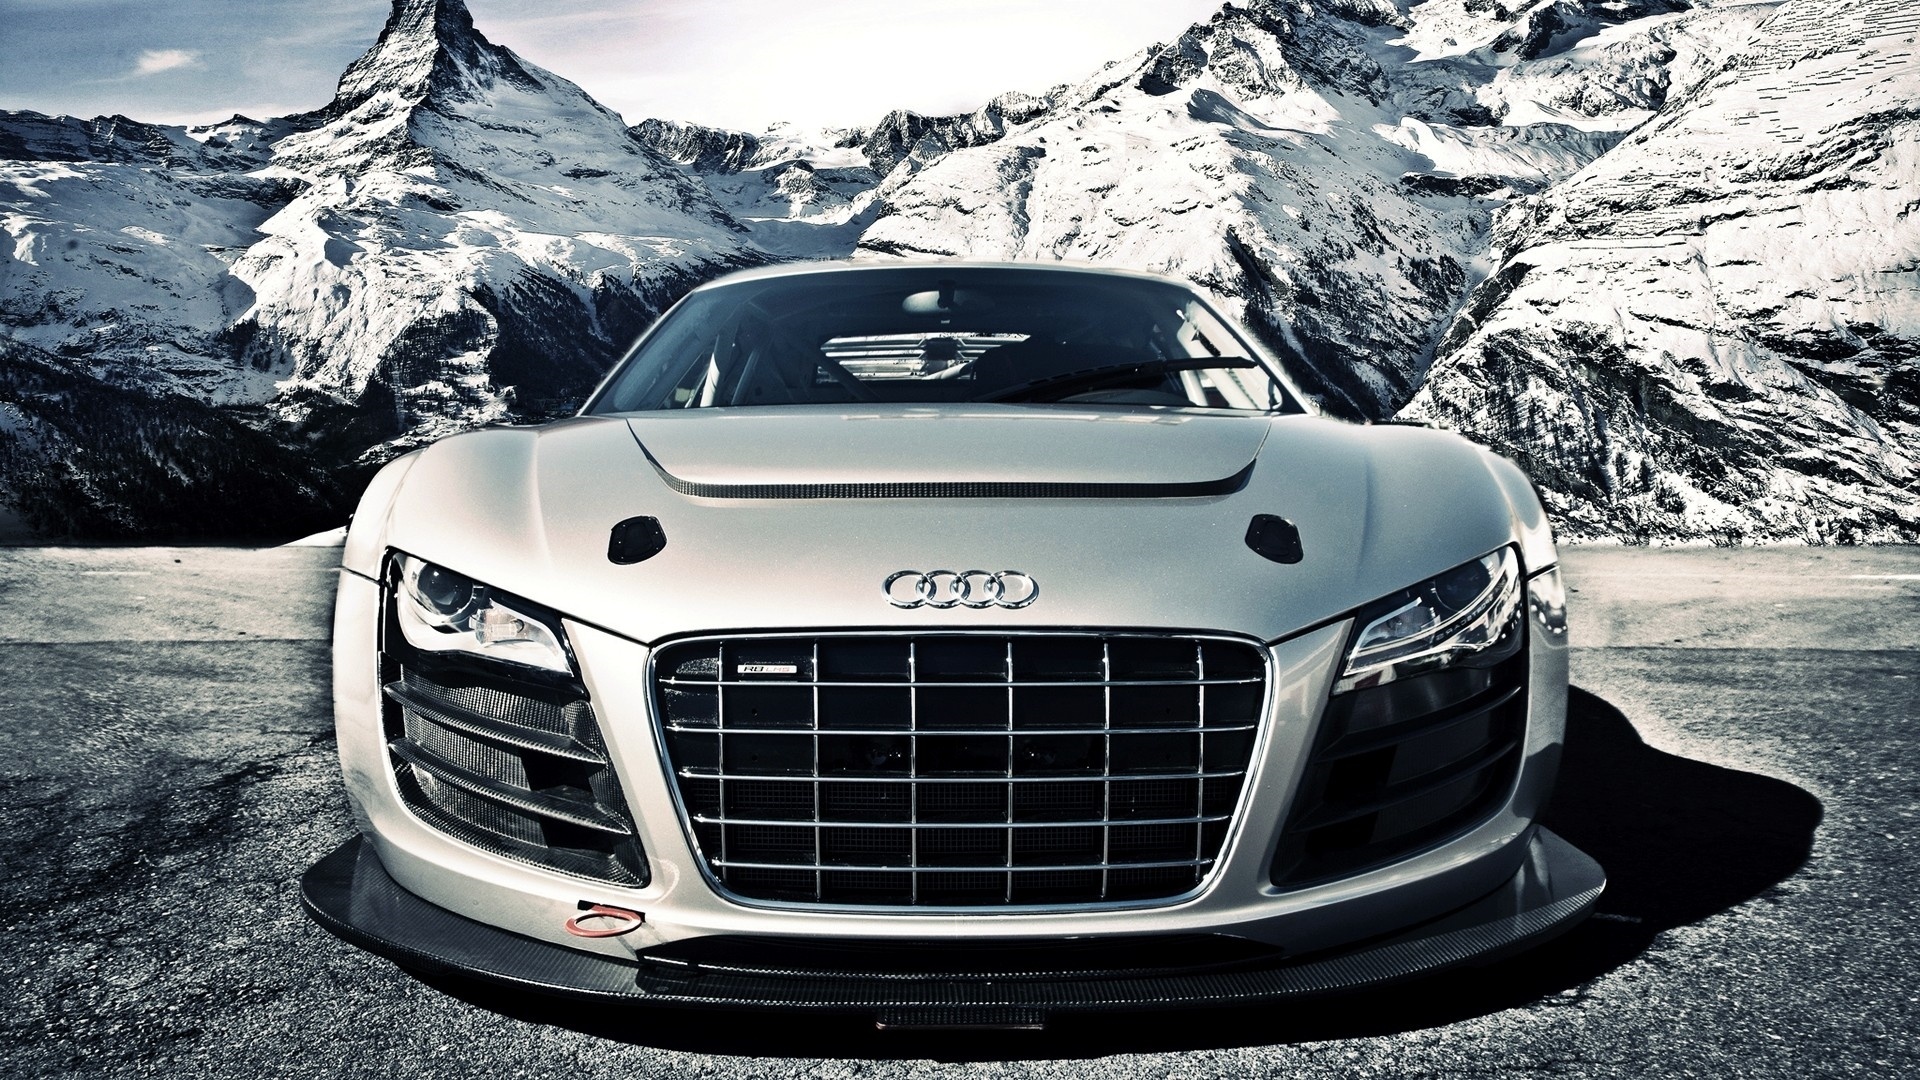 Audi R8 desktop wallpaper free download